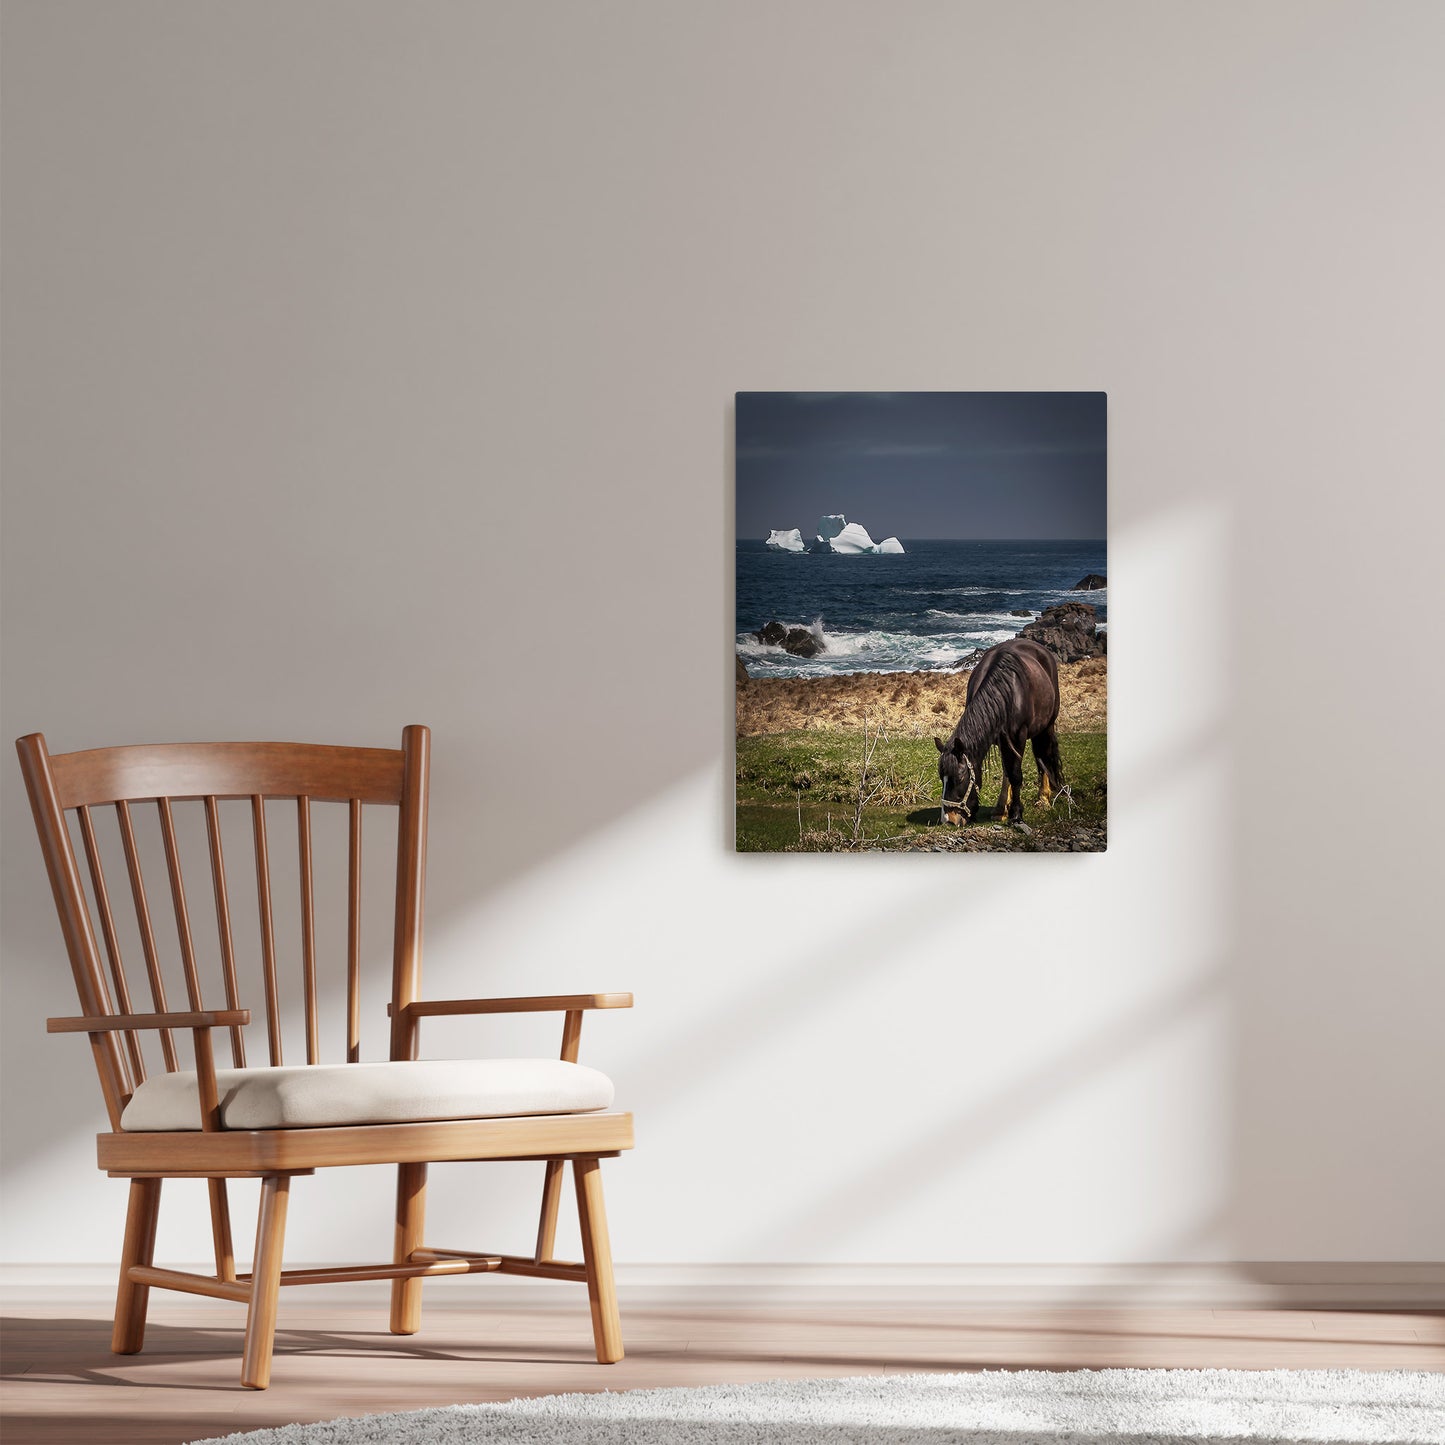 Ray Mackey's Cape Bonavista Vista photography reproduced on HD metal print and displayed on wall